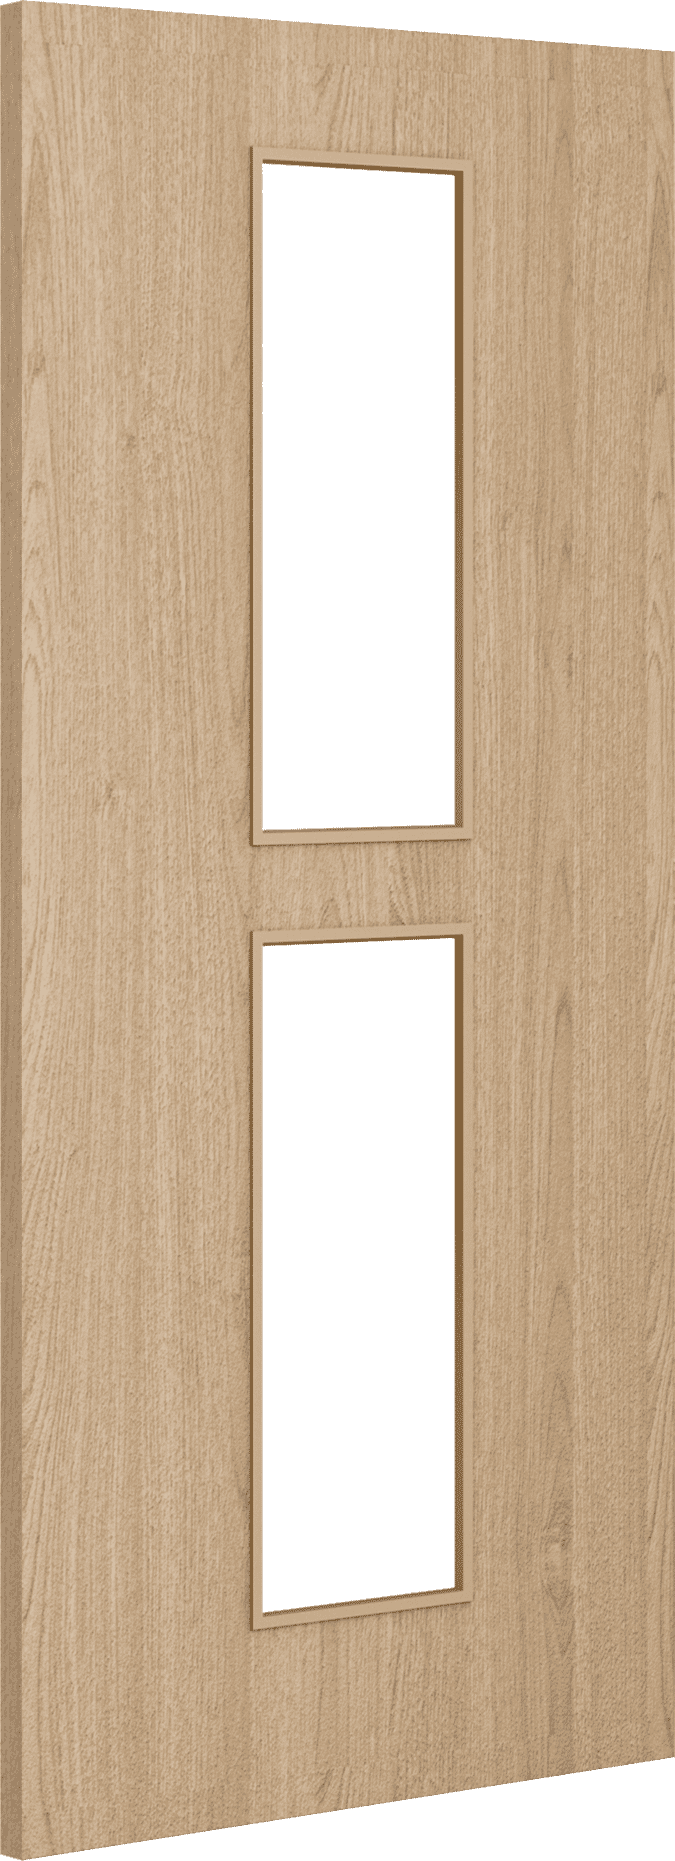 2040mm x 526mm x 44mm Architectural Oak 12 Frosted Glazed - Prefinished FD30 Fire Door Blank